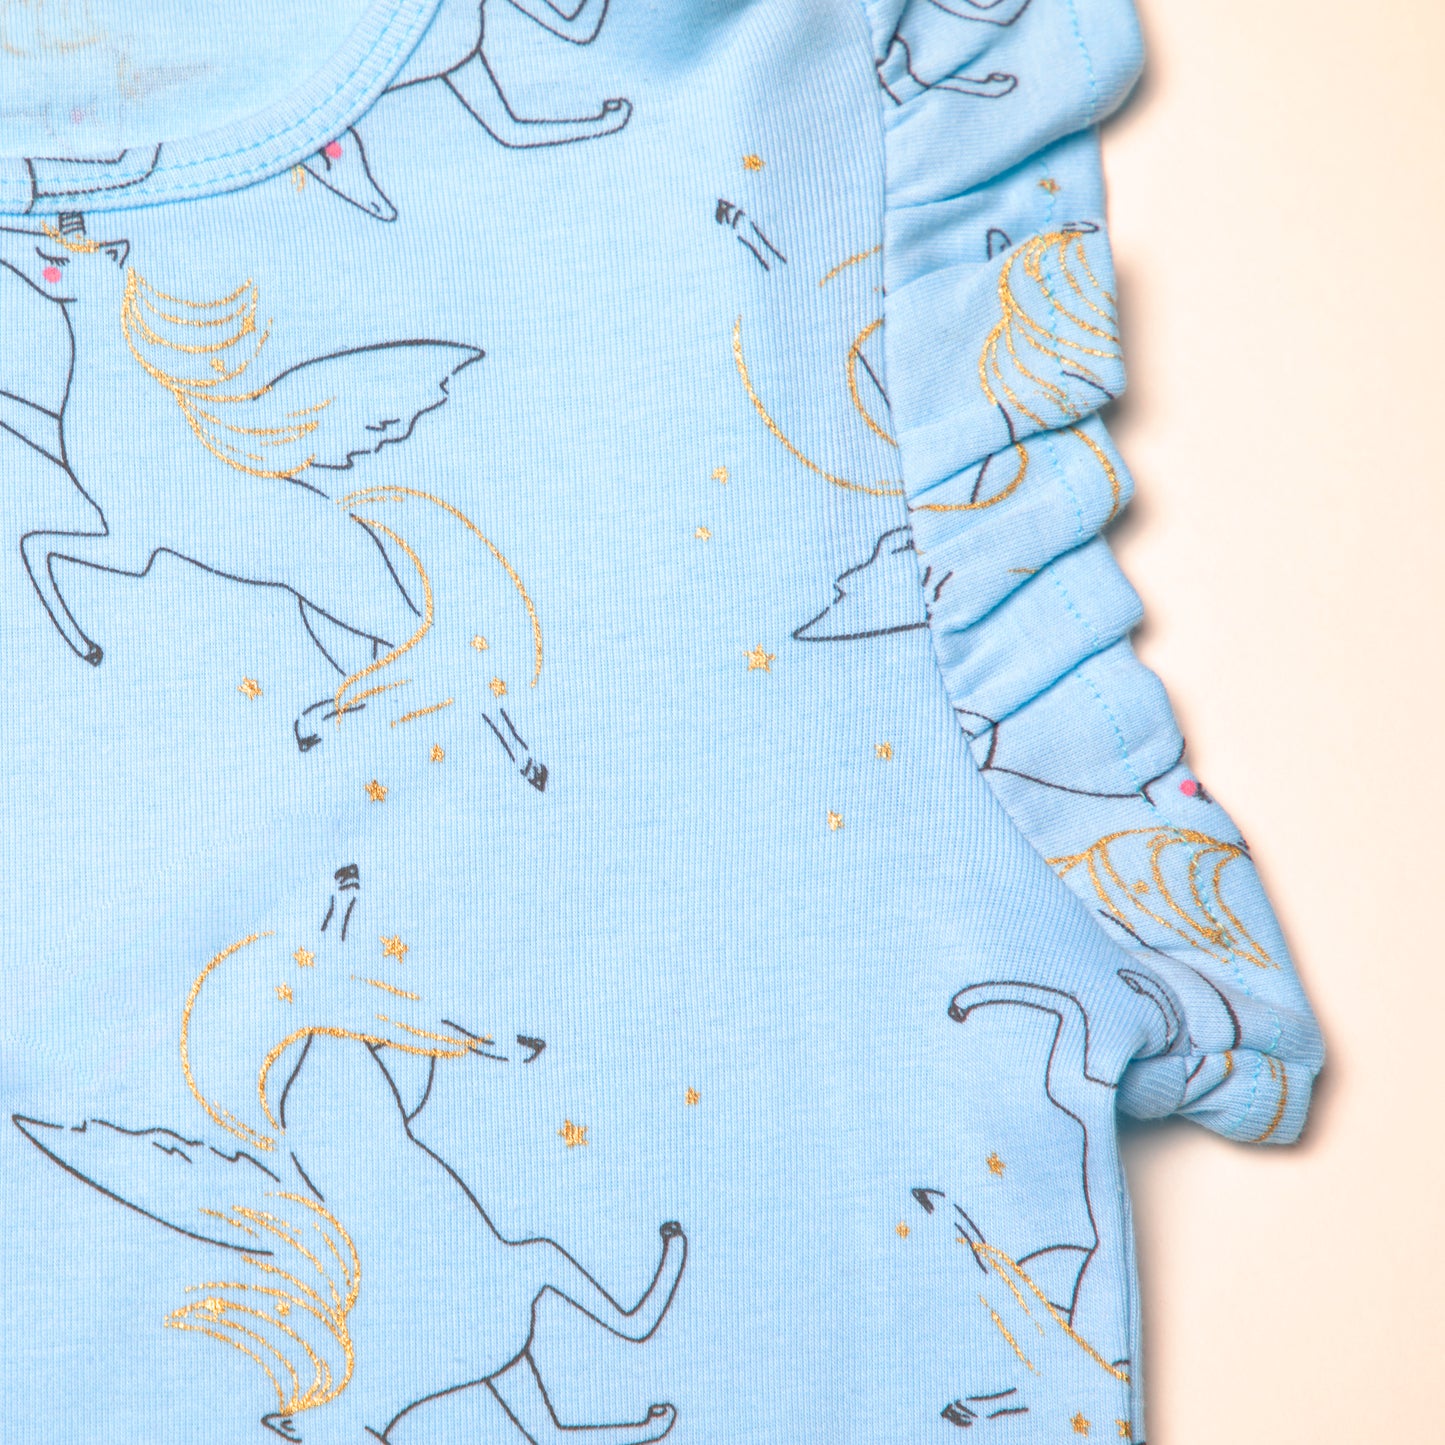 Baby Blue Flying Unicorns Nightdress